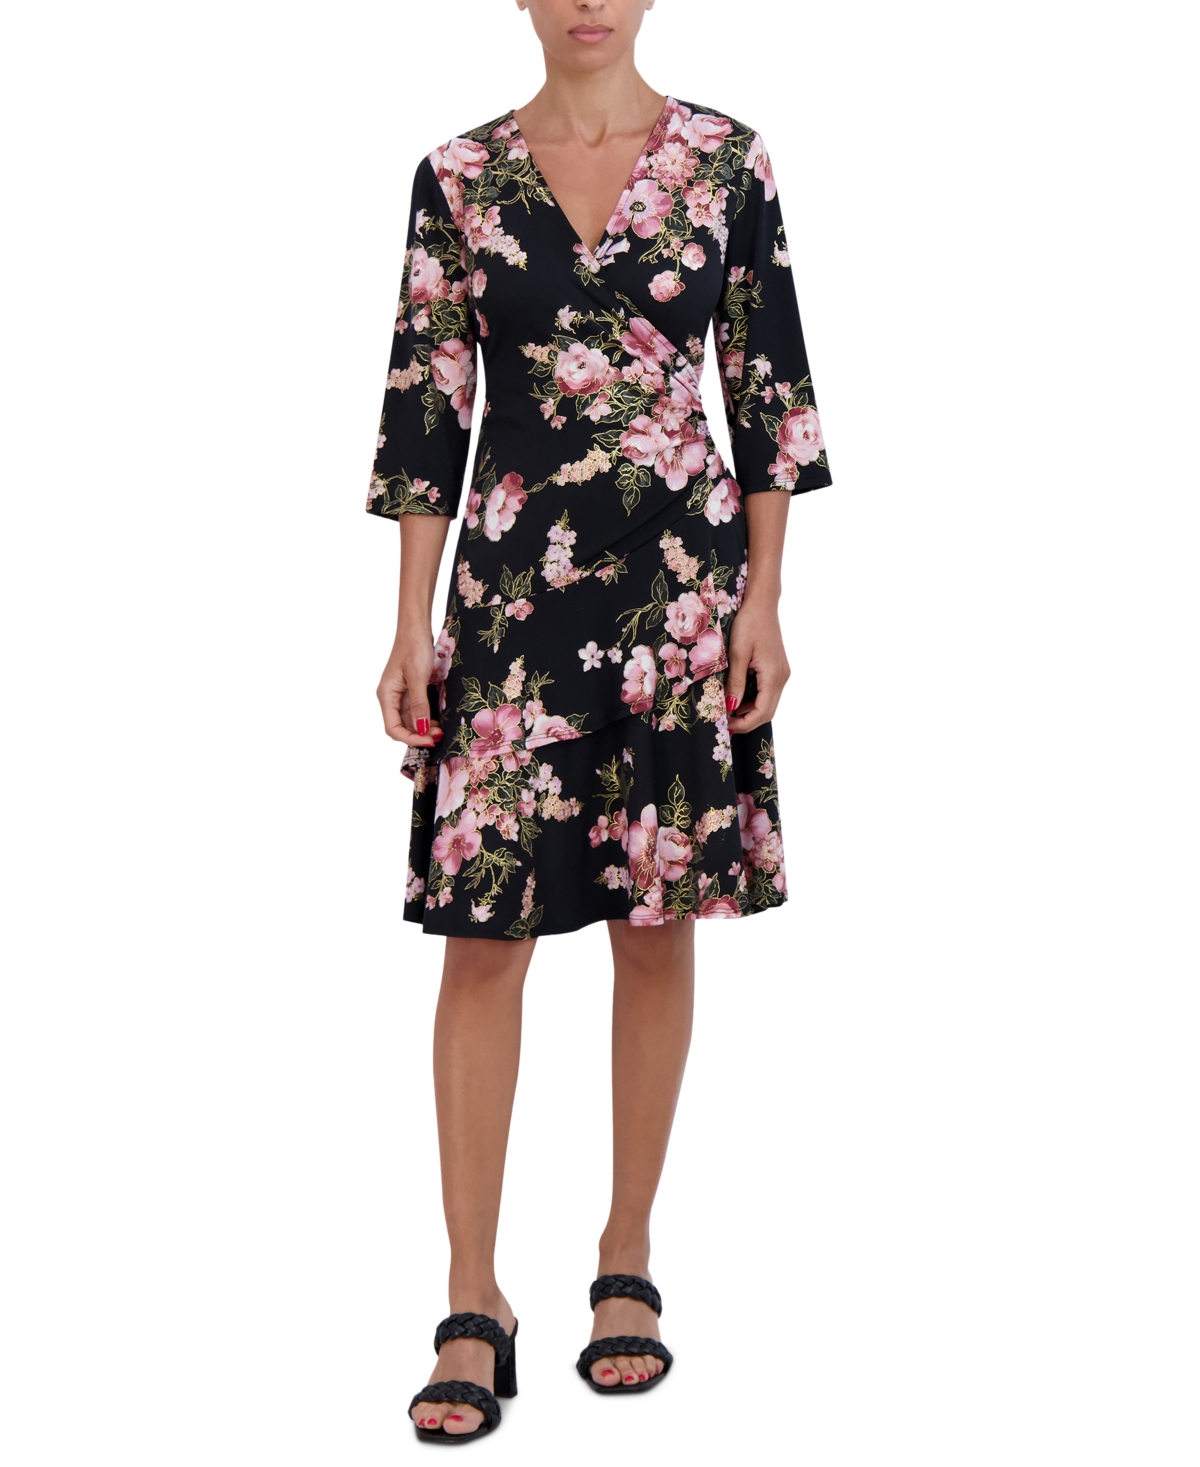 Petite Floral Ruffle-Skirt 3/4-Sleeve Dress - Black Multi